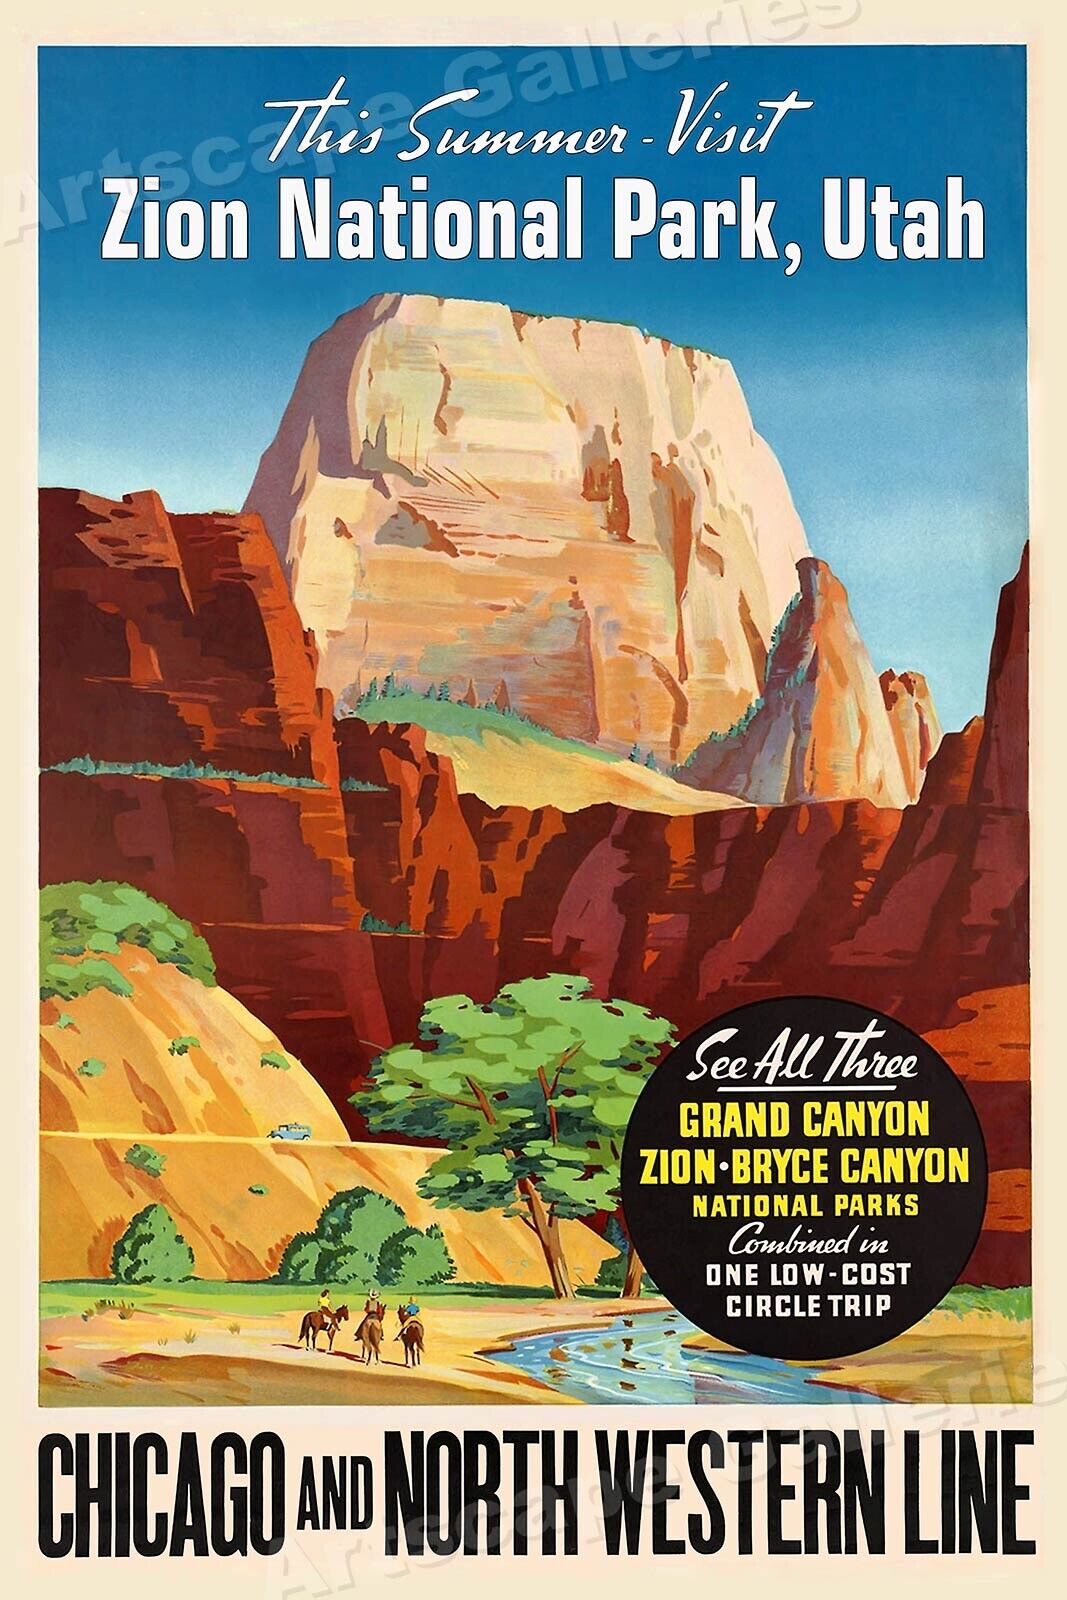 Visit Zion National Park 1950s Vintage Style Railroad Travel Poster - 16x24